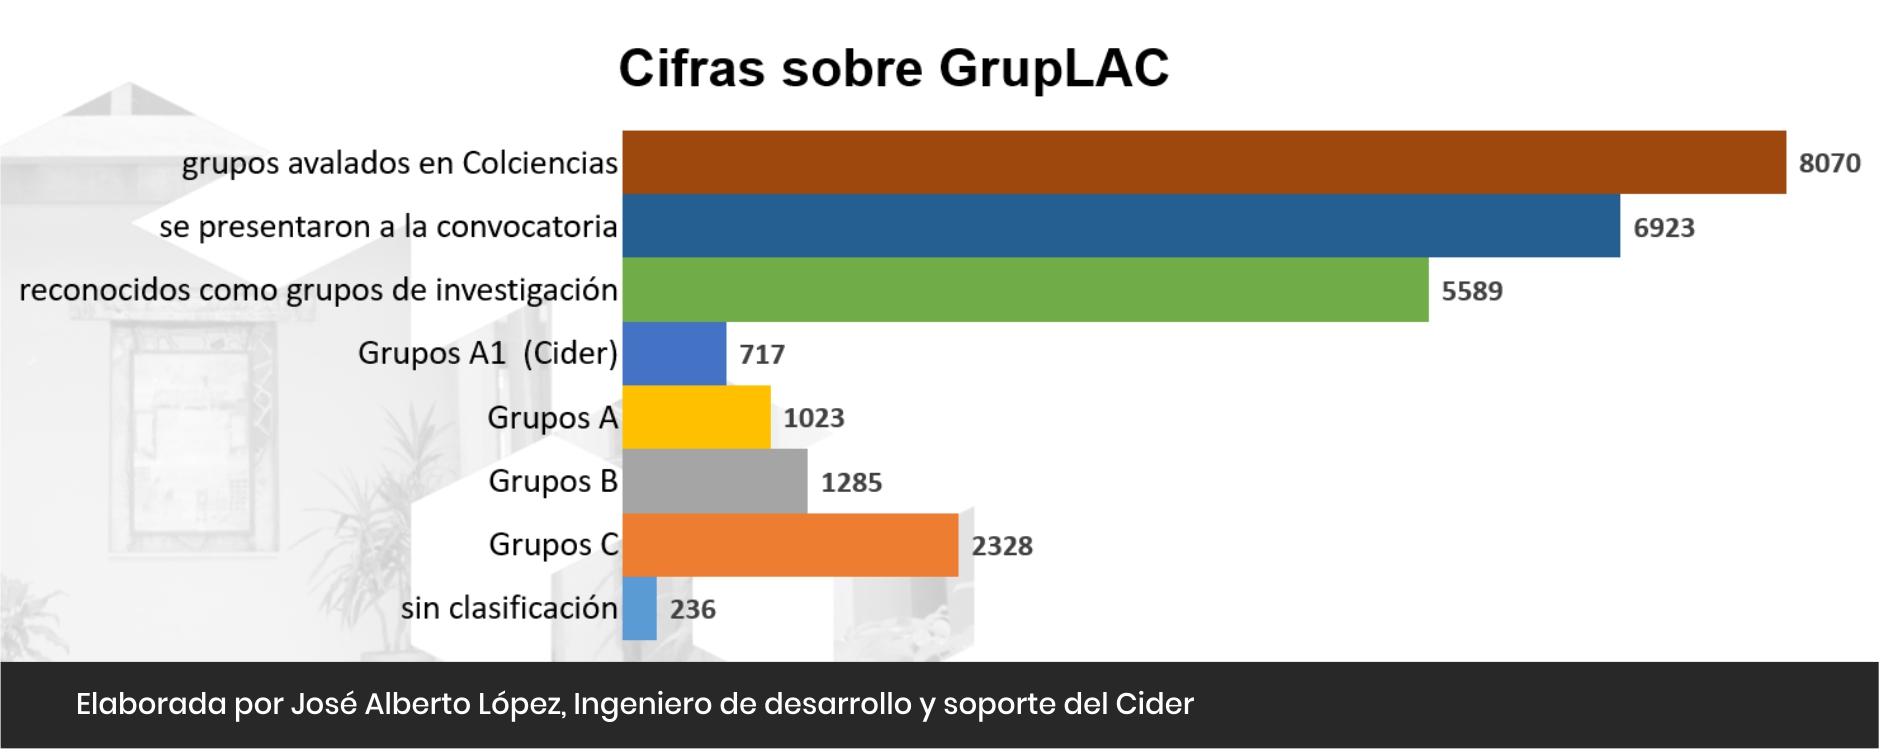 Cifras sobre GrupLAC Cider | Uniandes